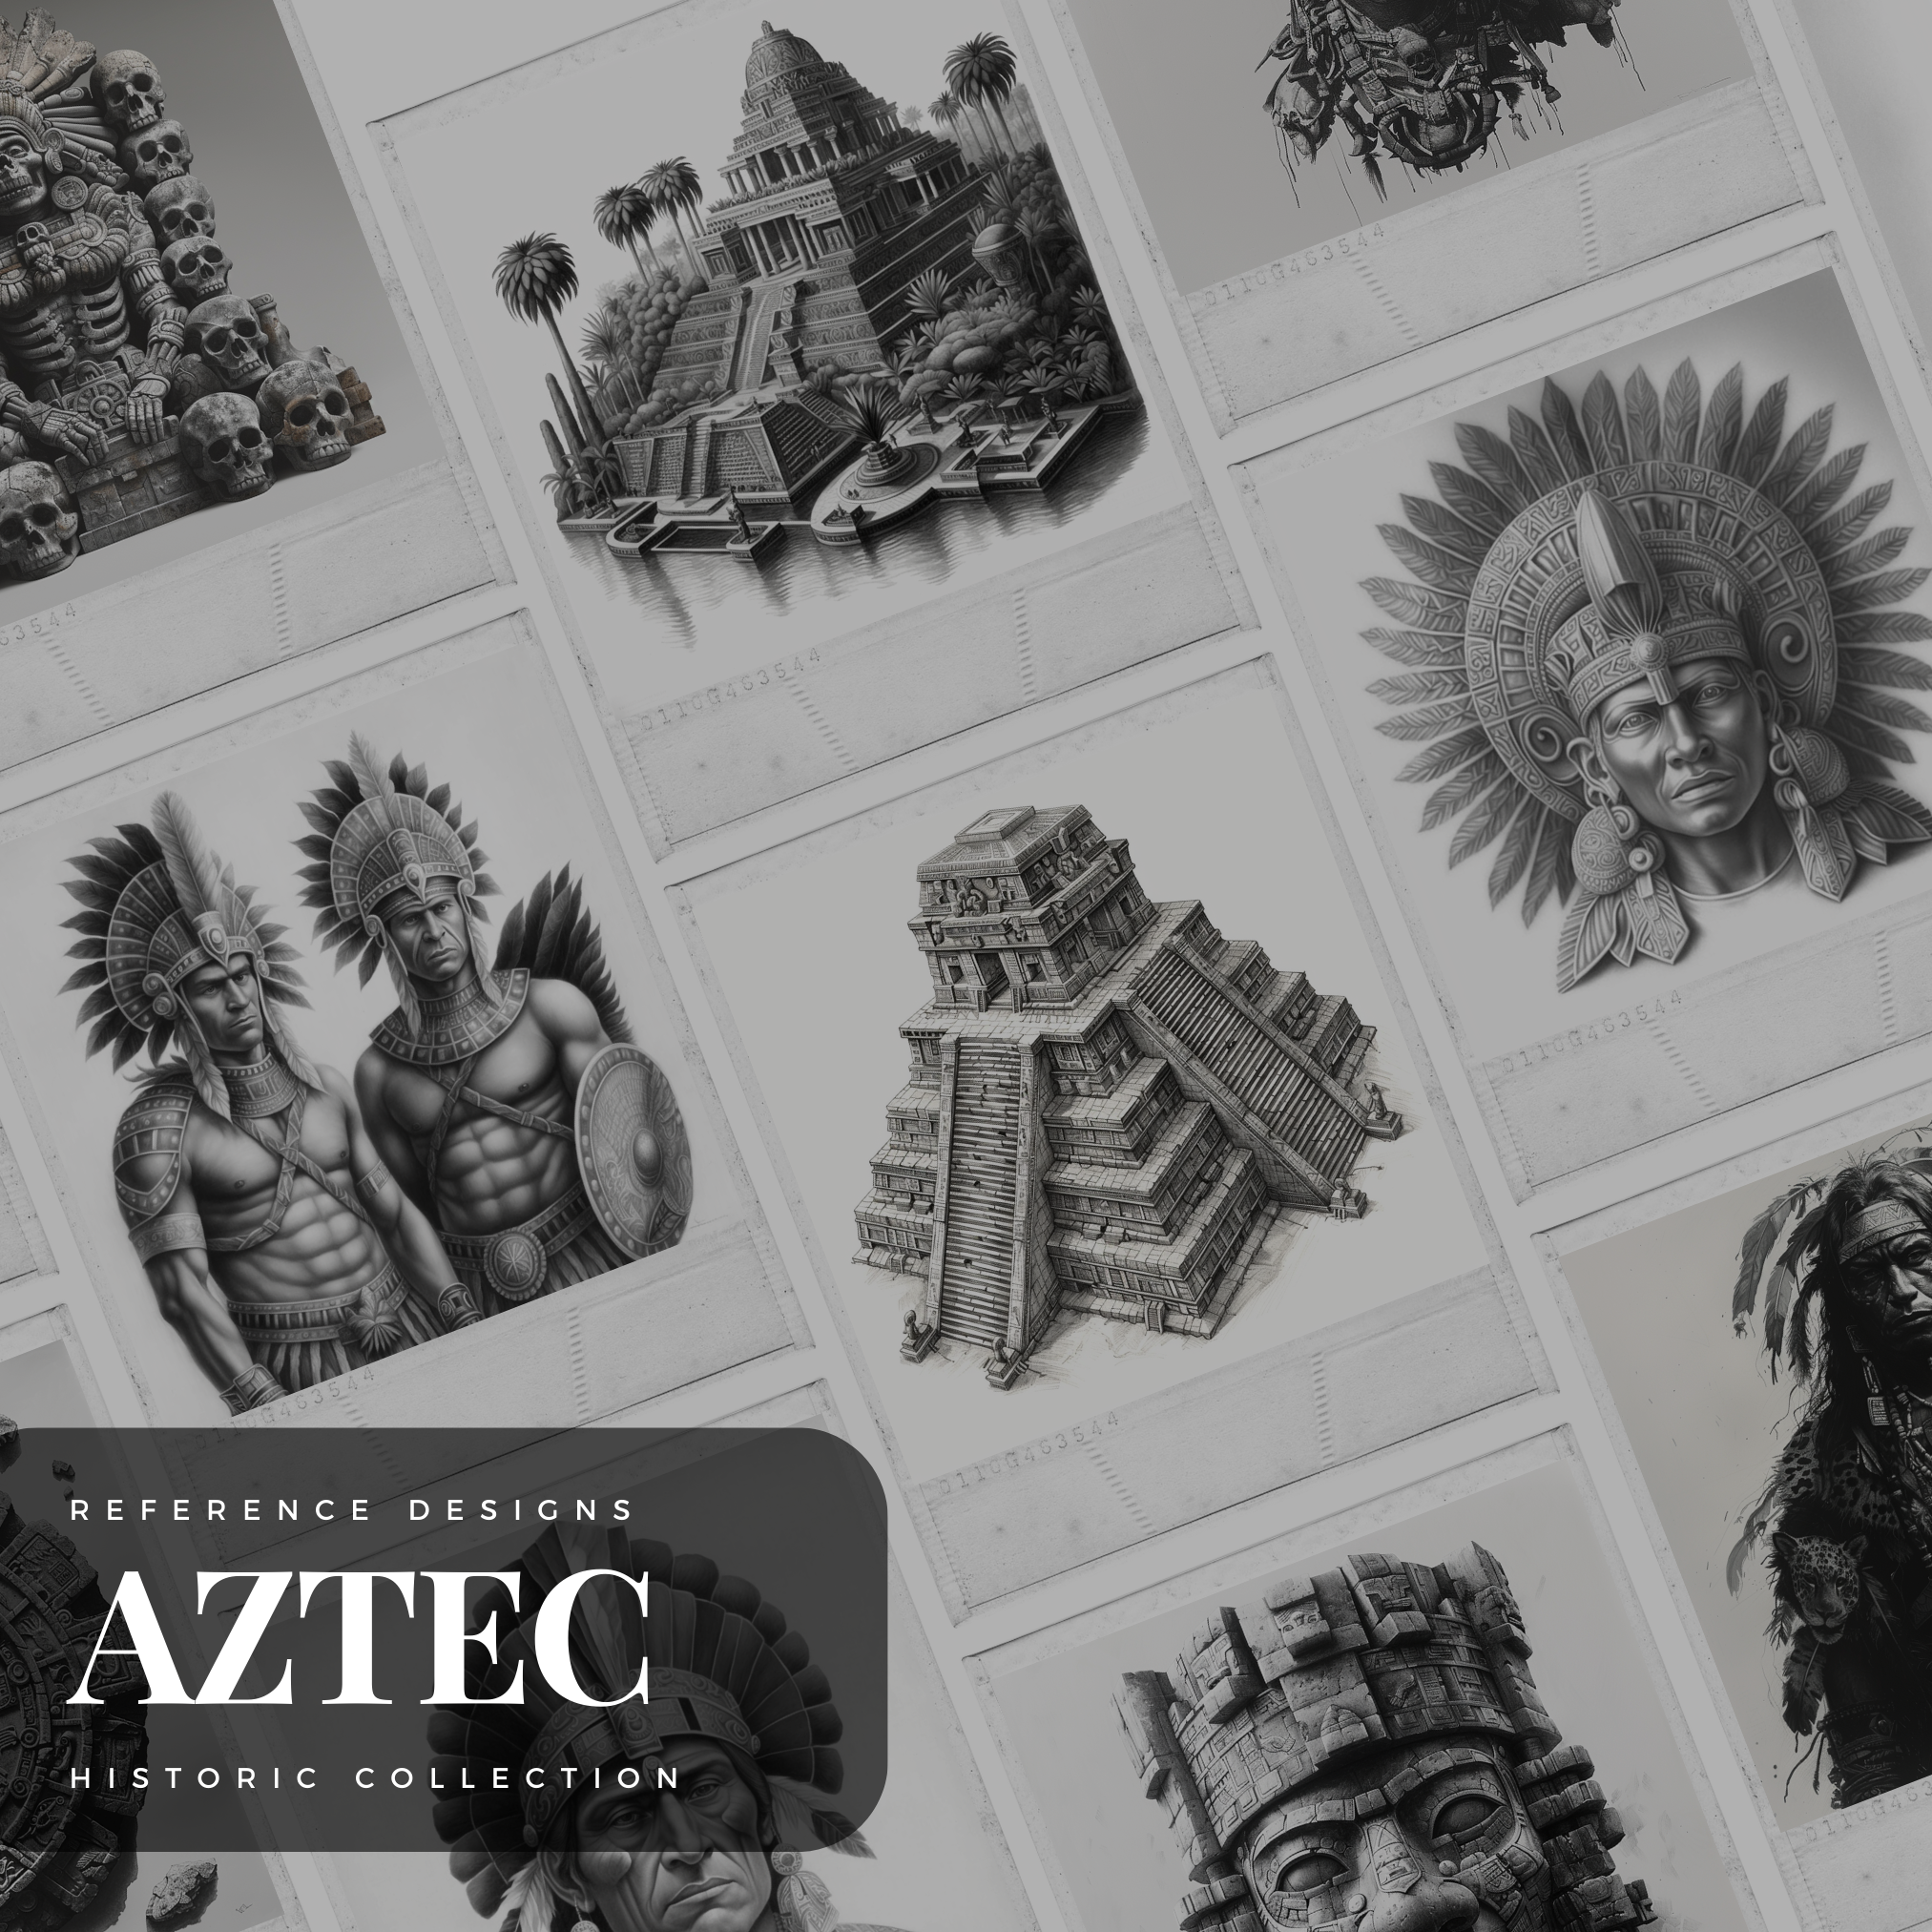 Aztec Empire Digital Design Collection: 100 Procreate & Sketchbook Images